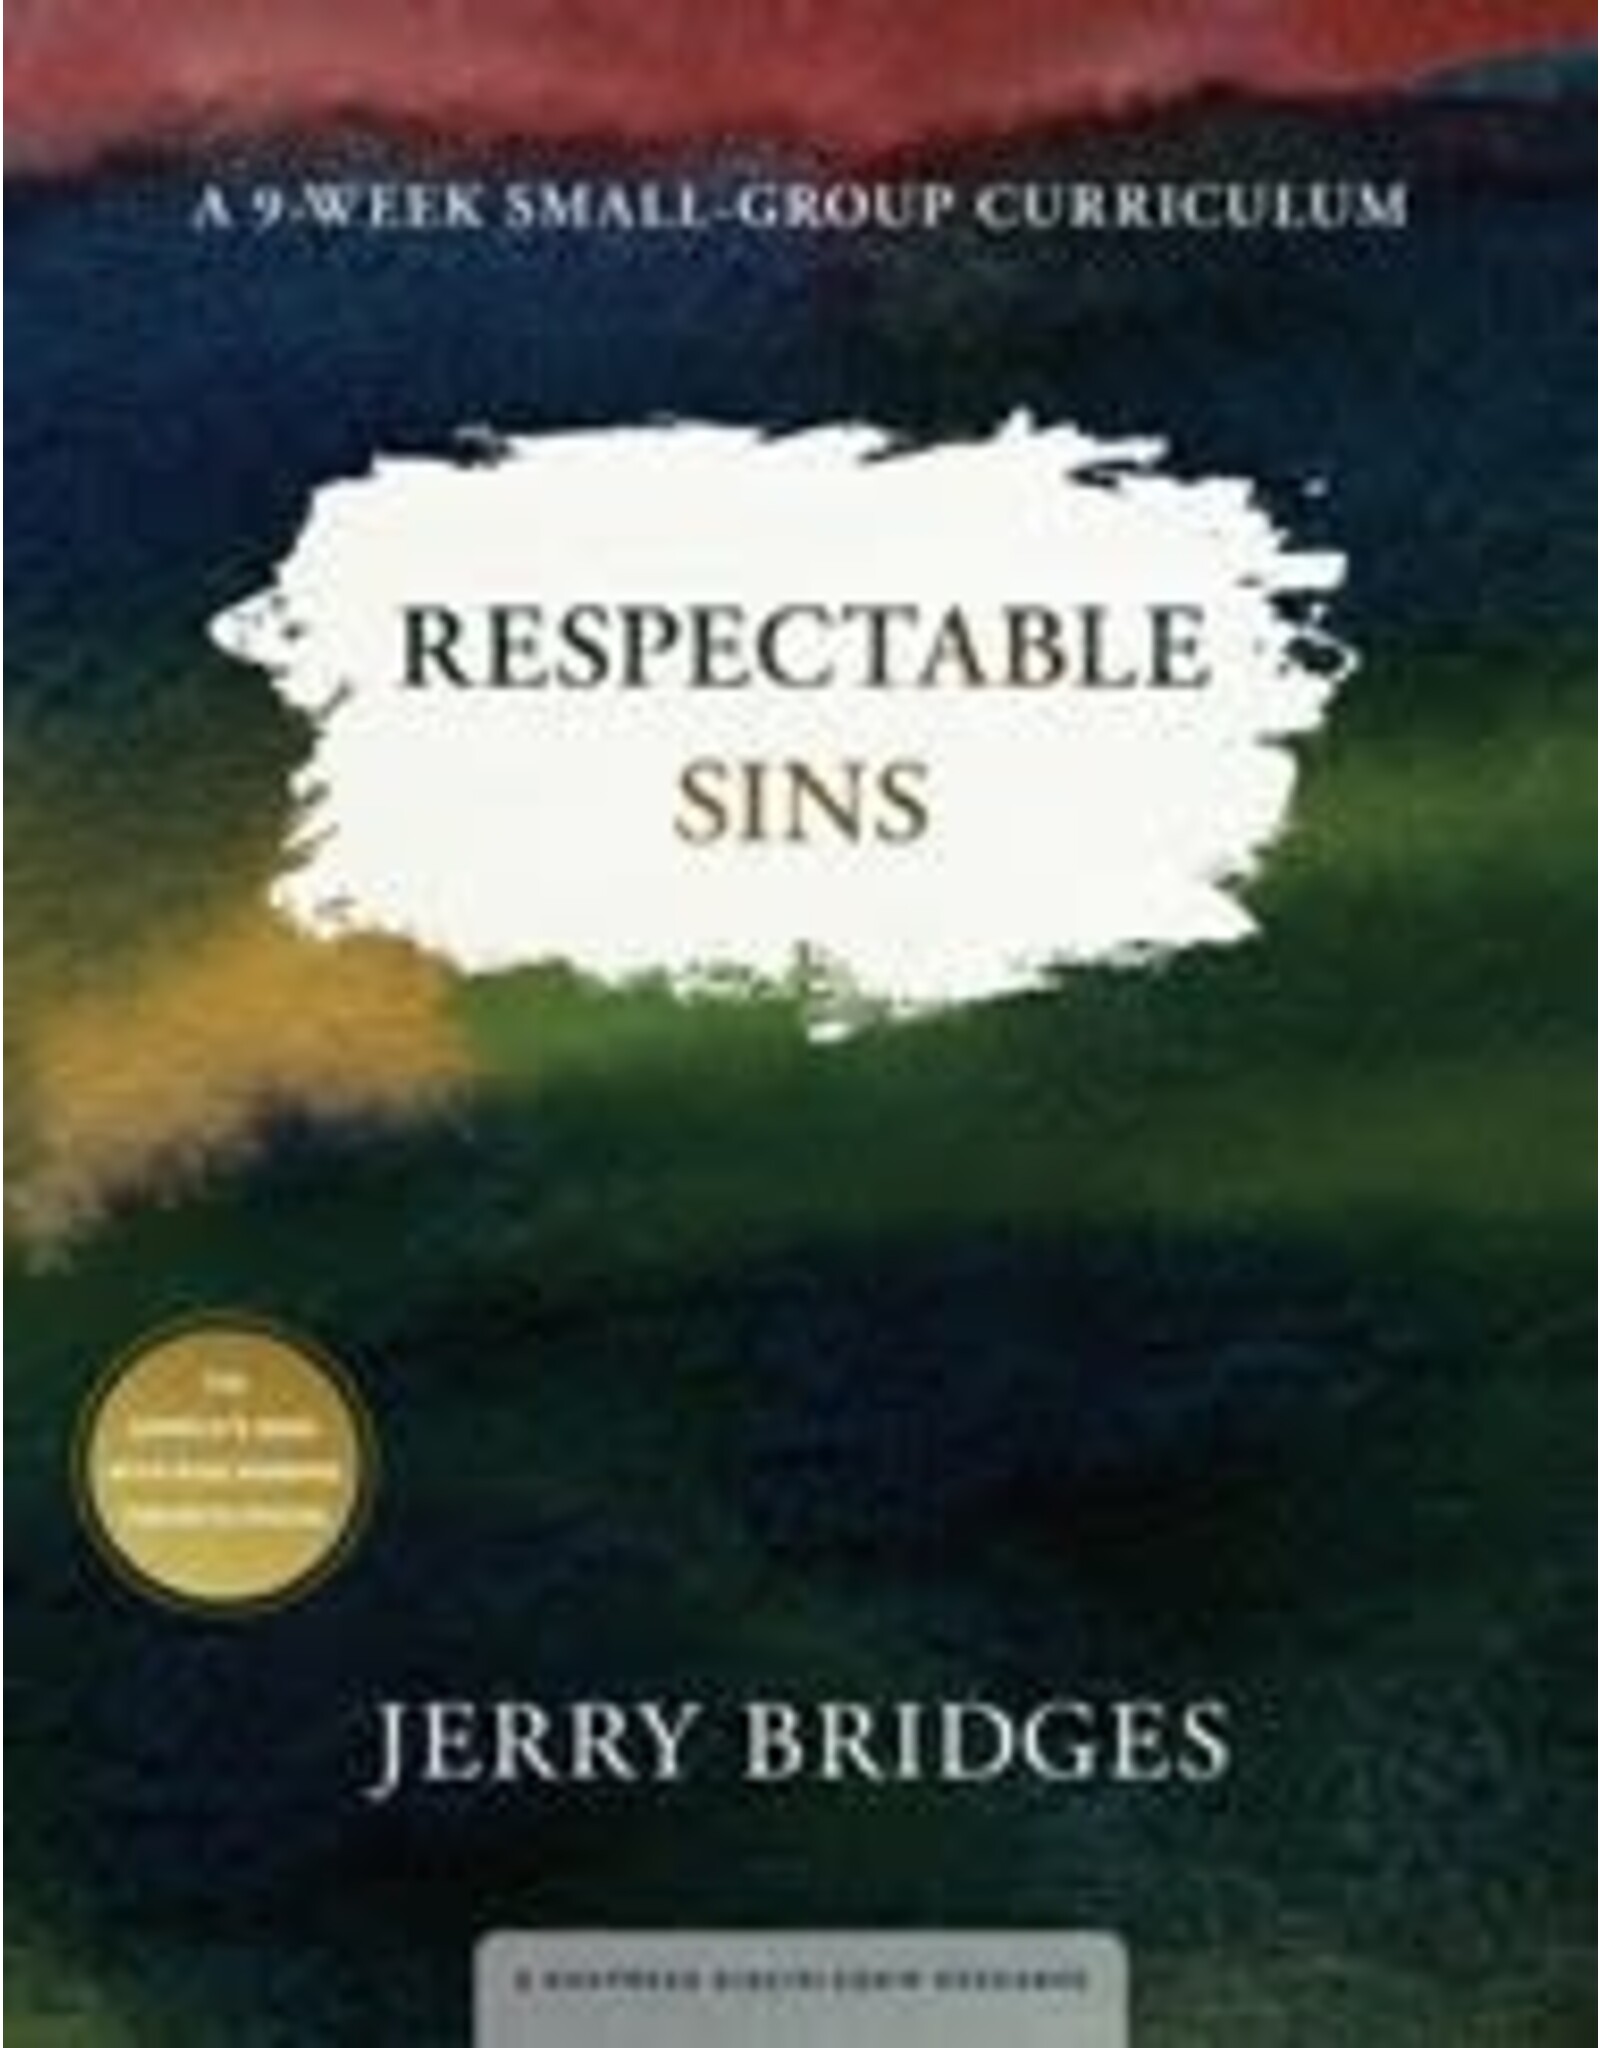 Jerry Bridges Respectable Sins - 9 Week Small Group Study